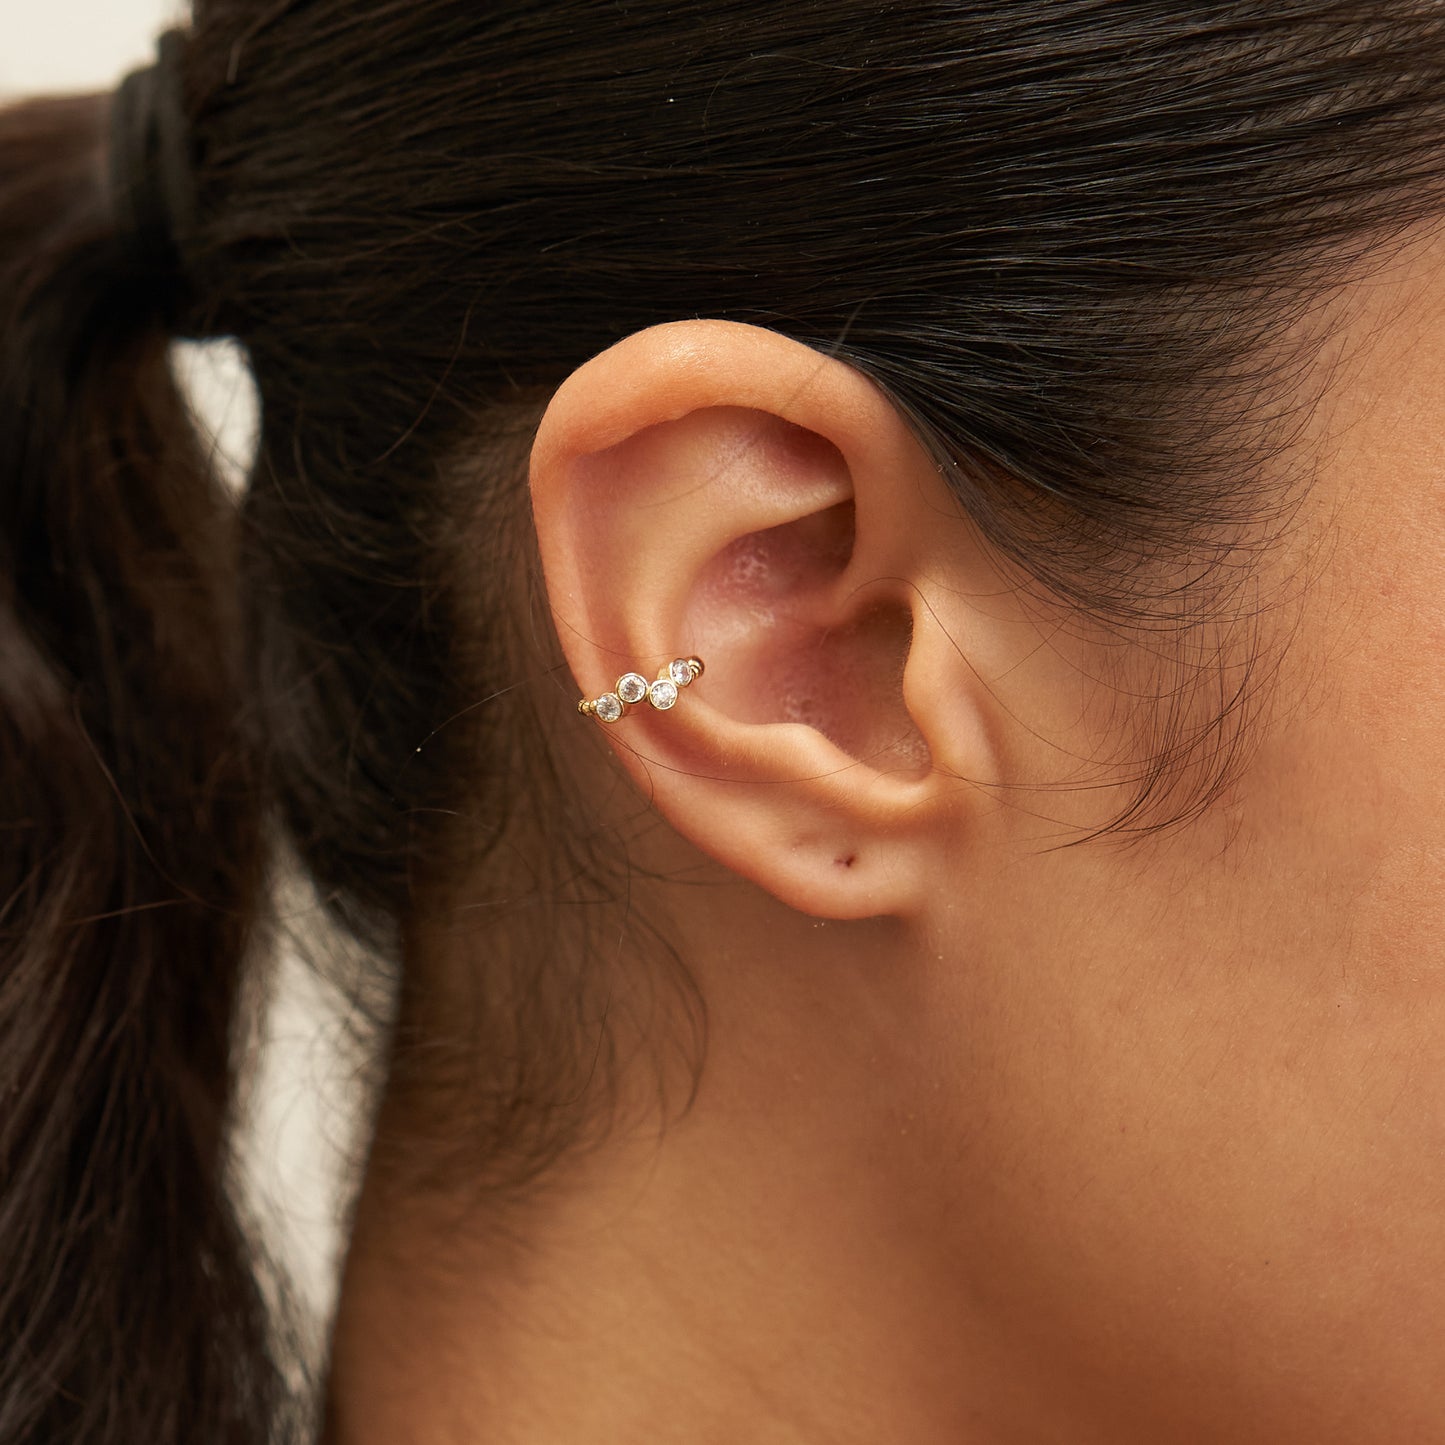 Shiny Adjustable Ear Cuff